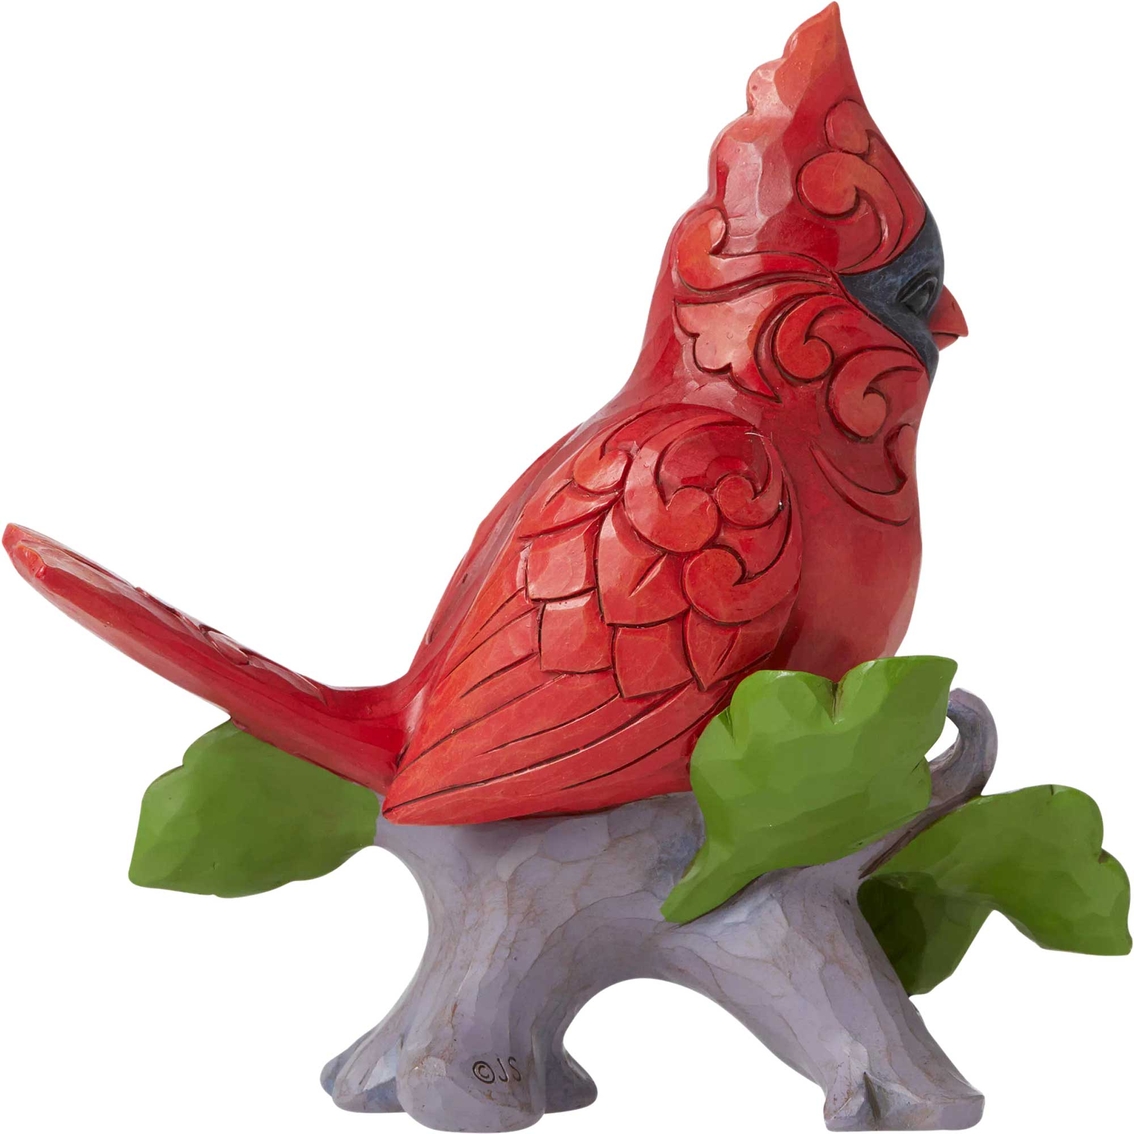 Jim Shore Heartwood Creek Cardinal On Branch Figurine - Image 3 of 4